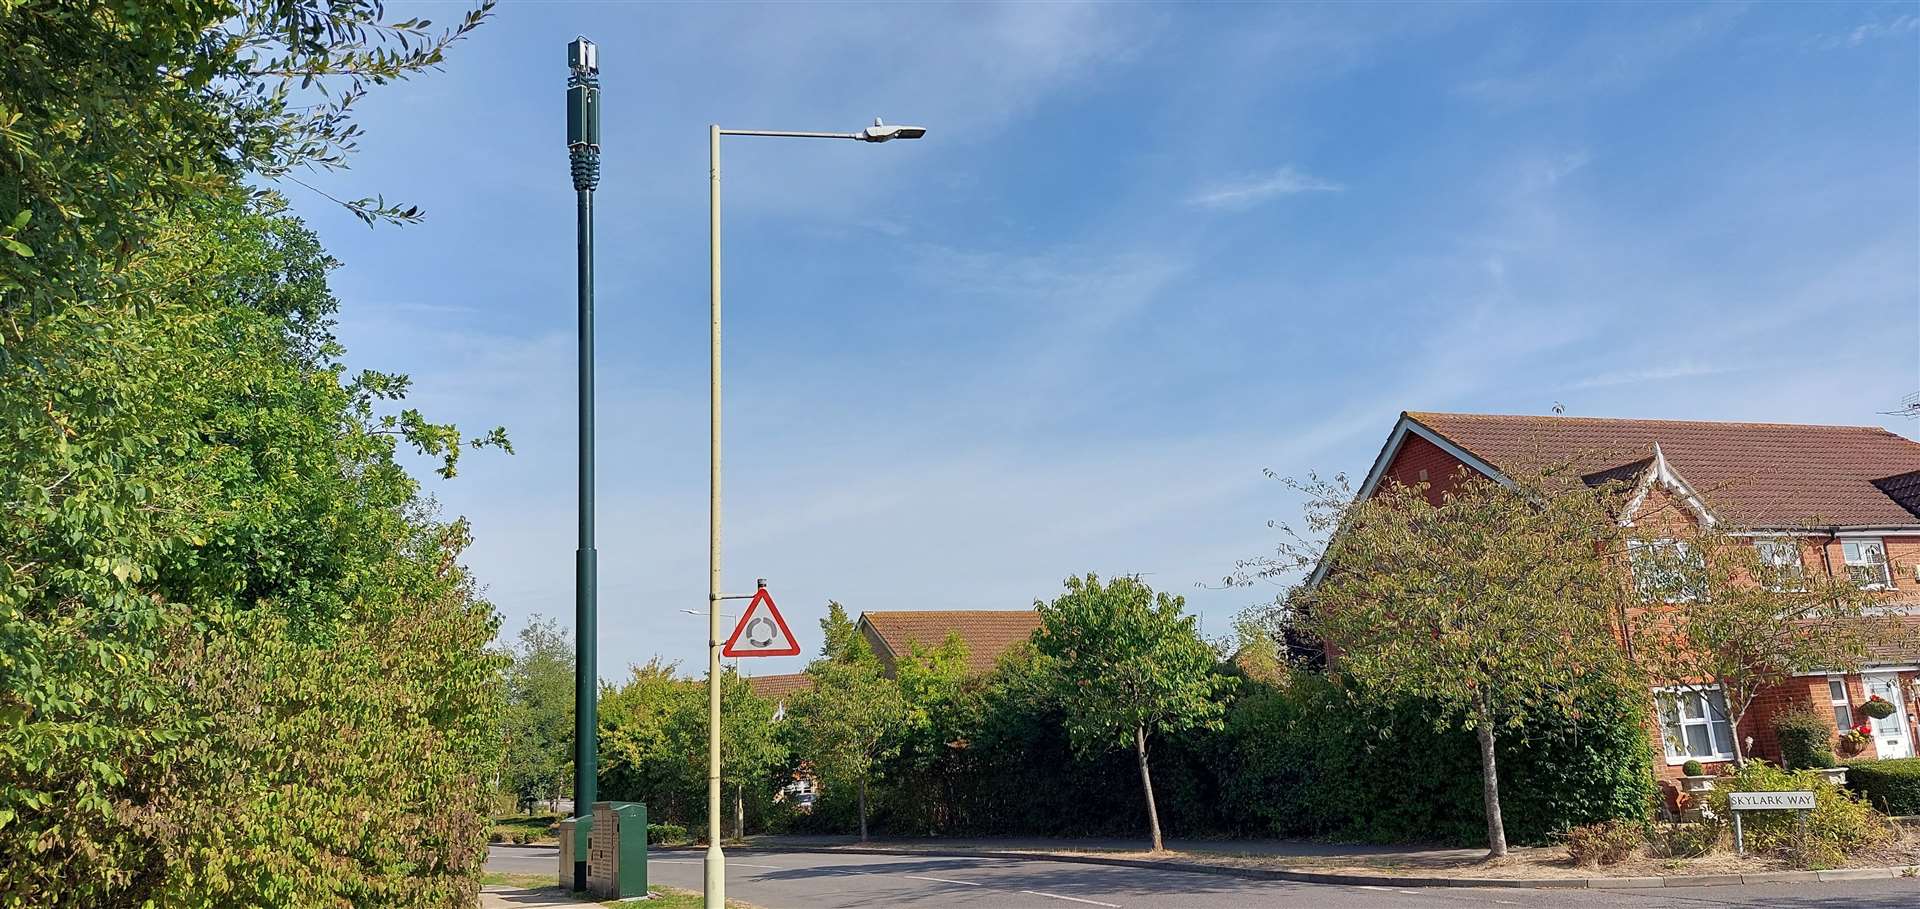 The 5G mast sits on Bluebell Road, opposite Skylark Way